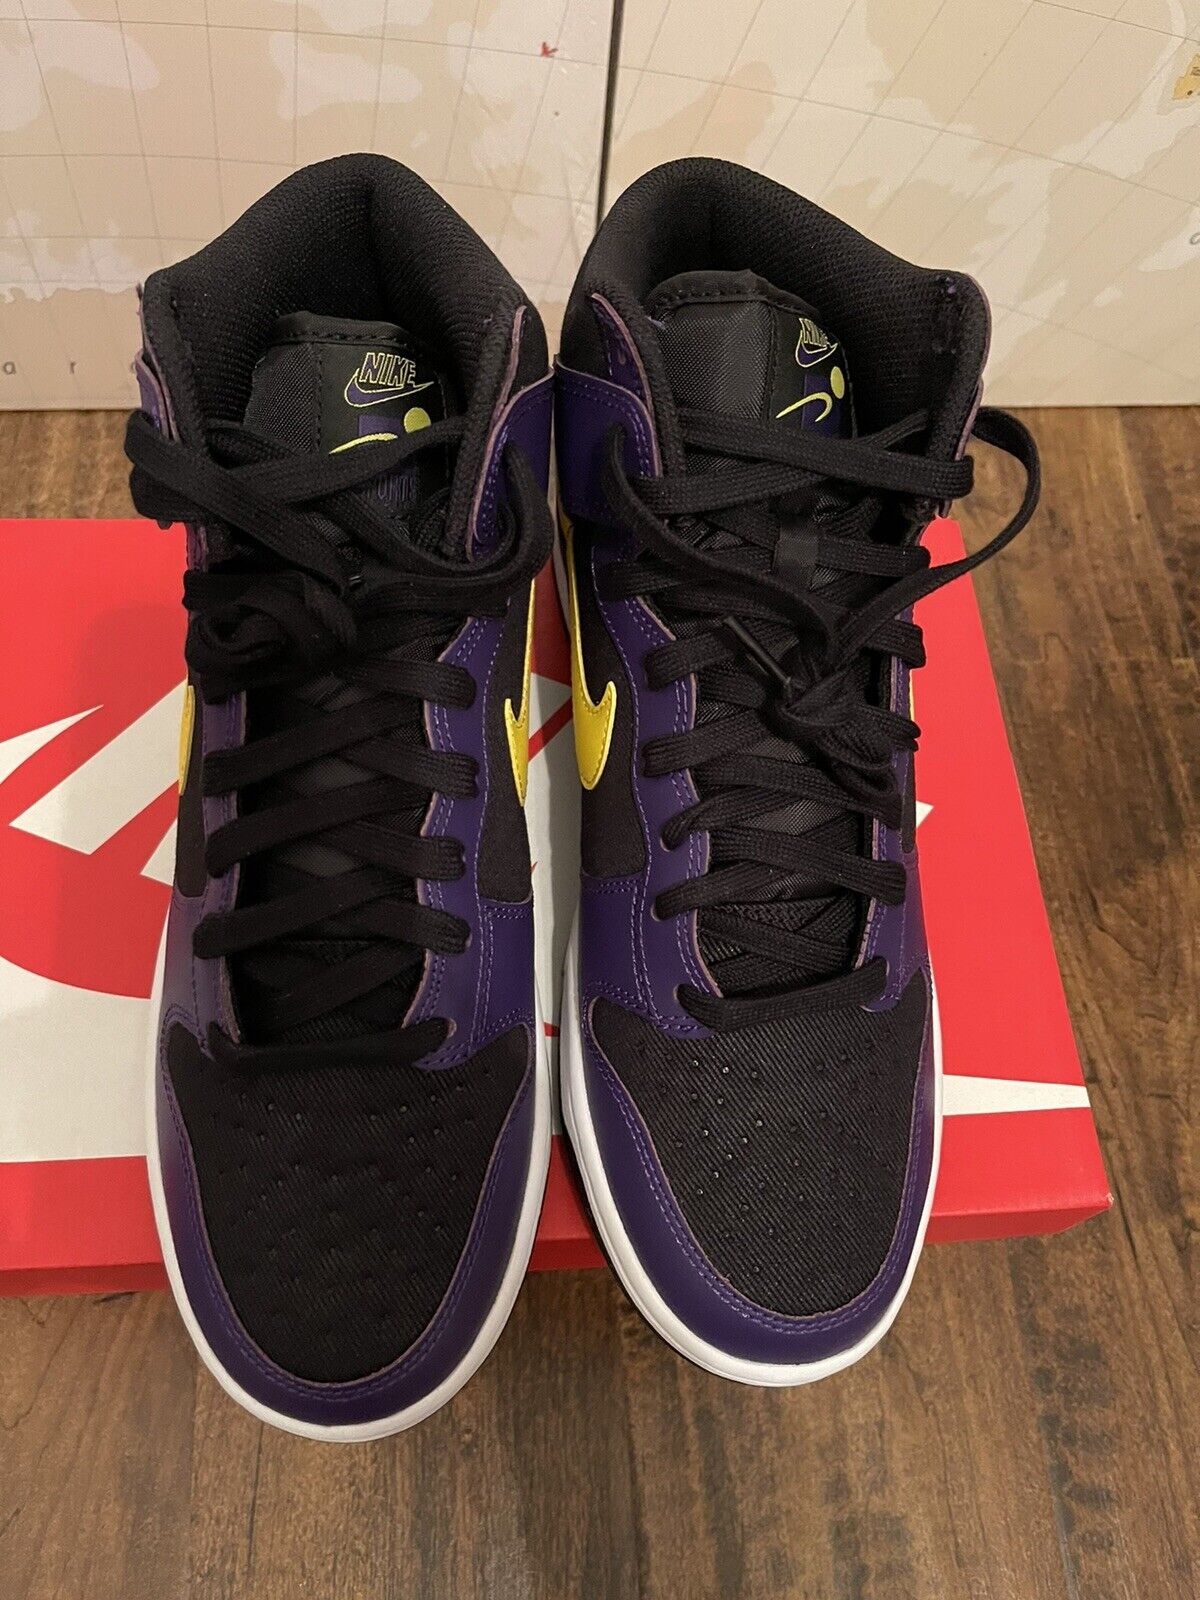 New NIB sz.9.5 Mens Nike Dunk High Hi PRM EMB Lakers DH0642-001 Court Purple